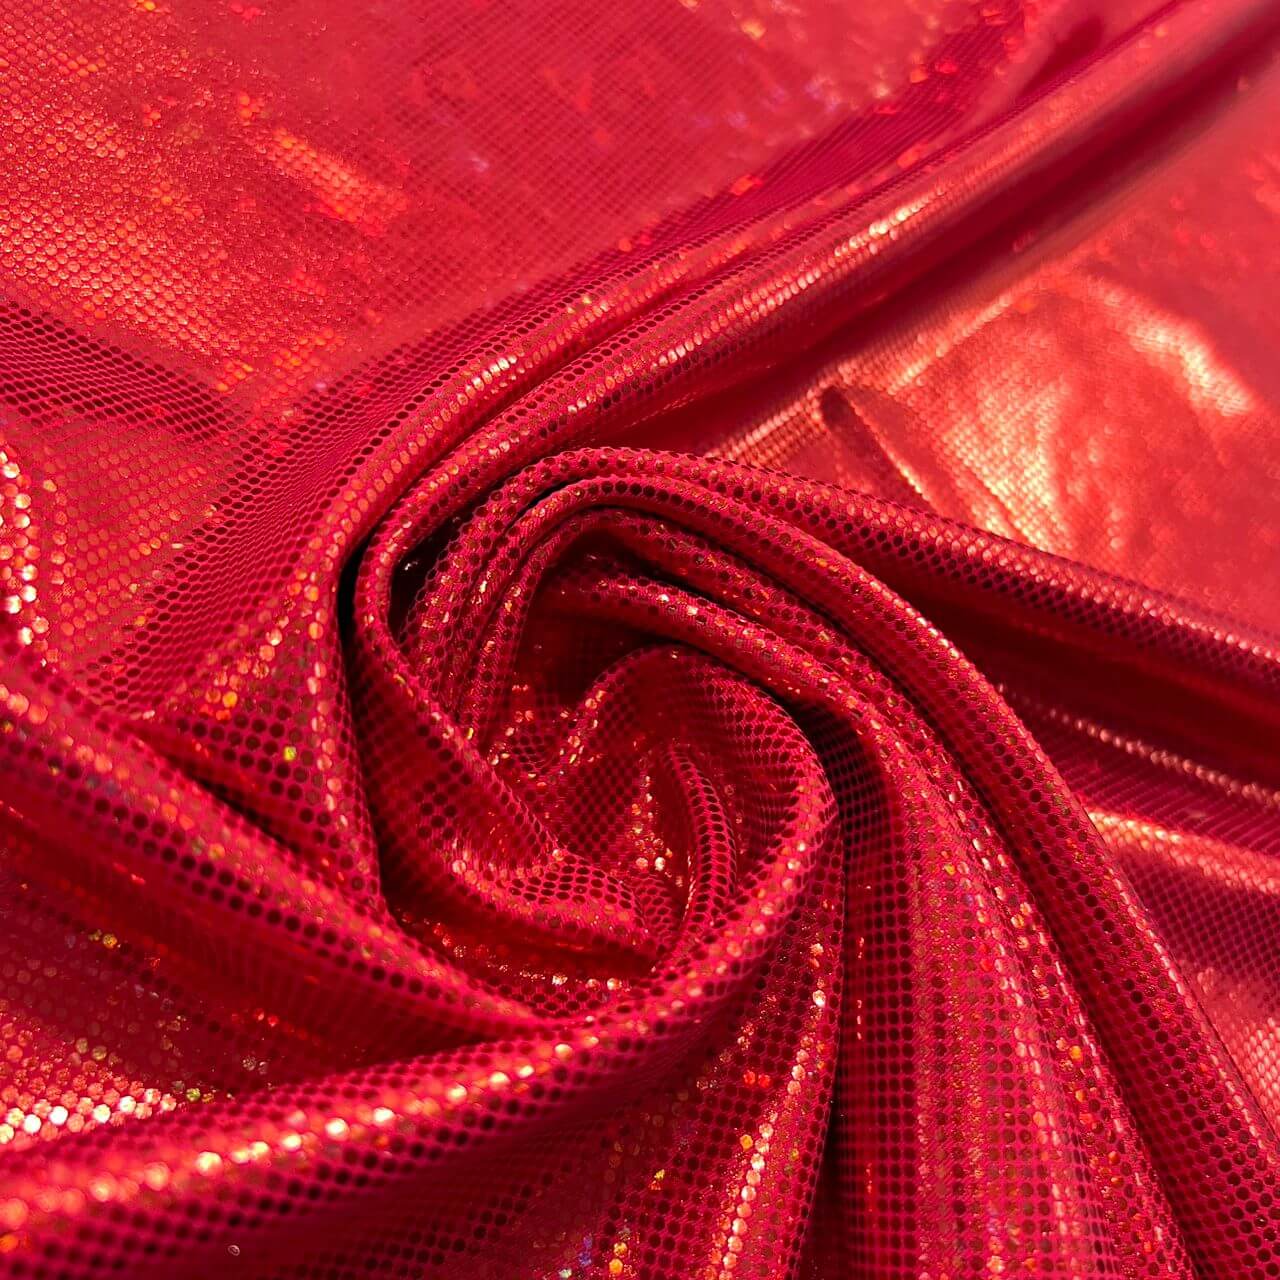 Vibrant Red Broken Glass Hologram Nylon Lycra Spandex Fabric 4 Way Stretch  By The Yard for swimwear dancewear sportwear dress (242-4) Spandex Fabric